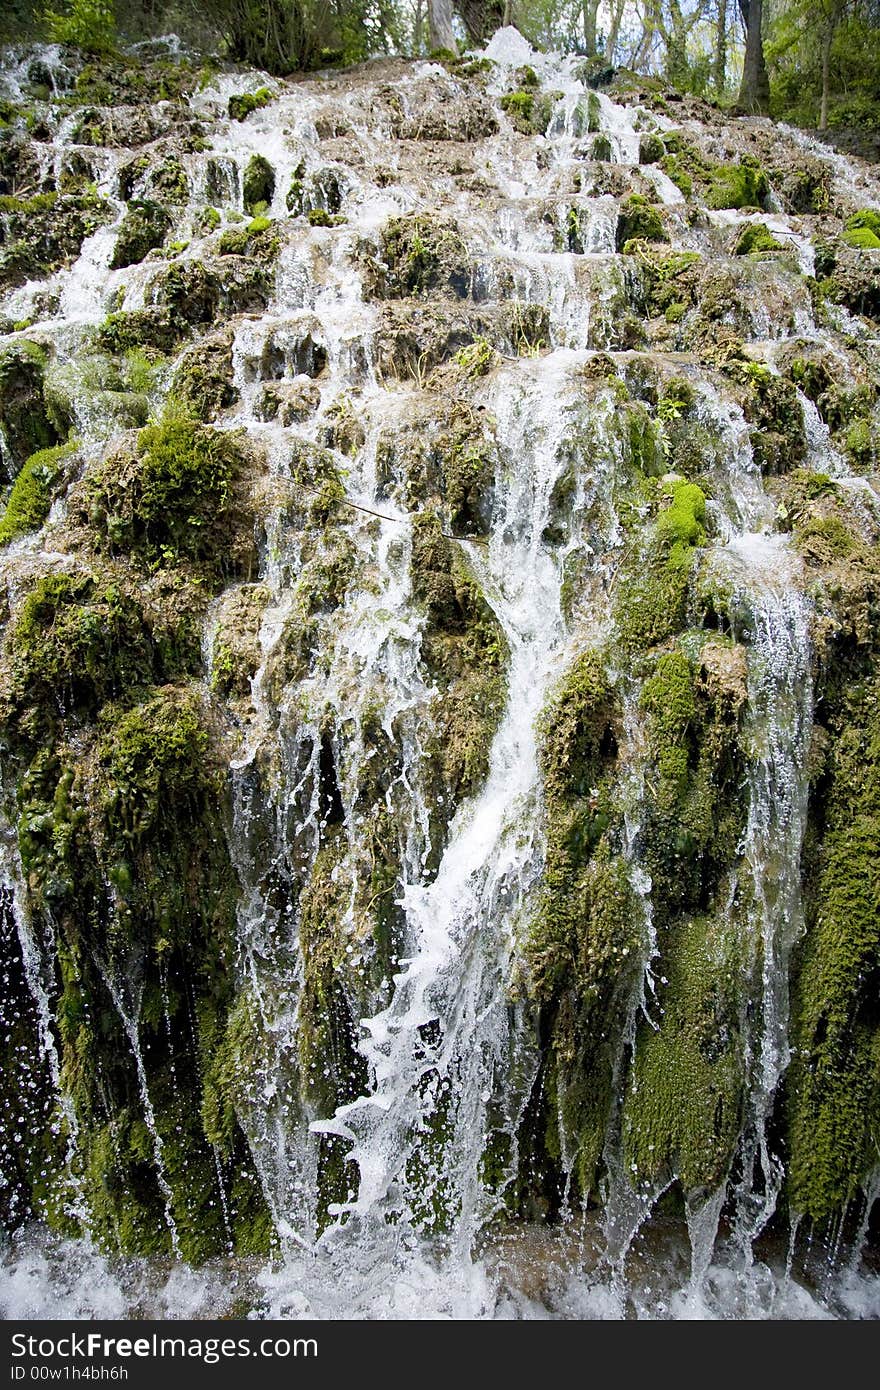 Waterfall at monasterio de piedra saragossa aragon spain. Waterfall at monasterio de piedra saragossa aragon spain